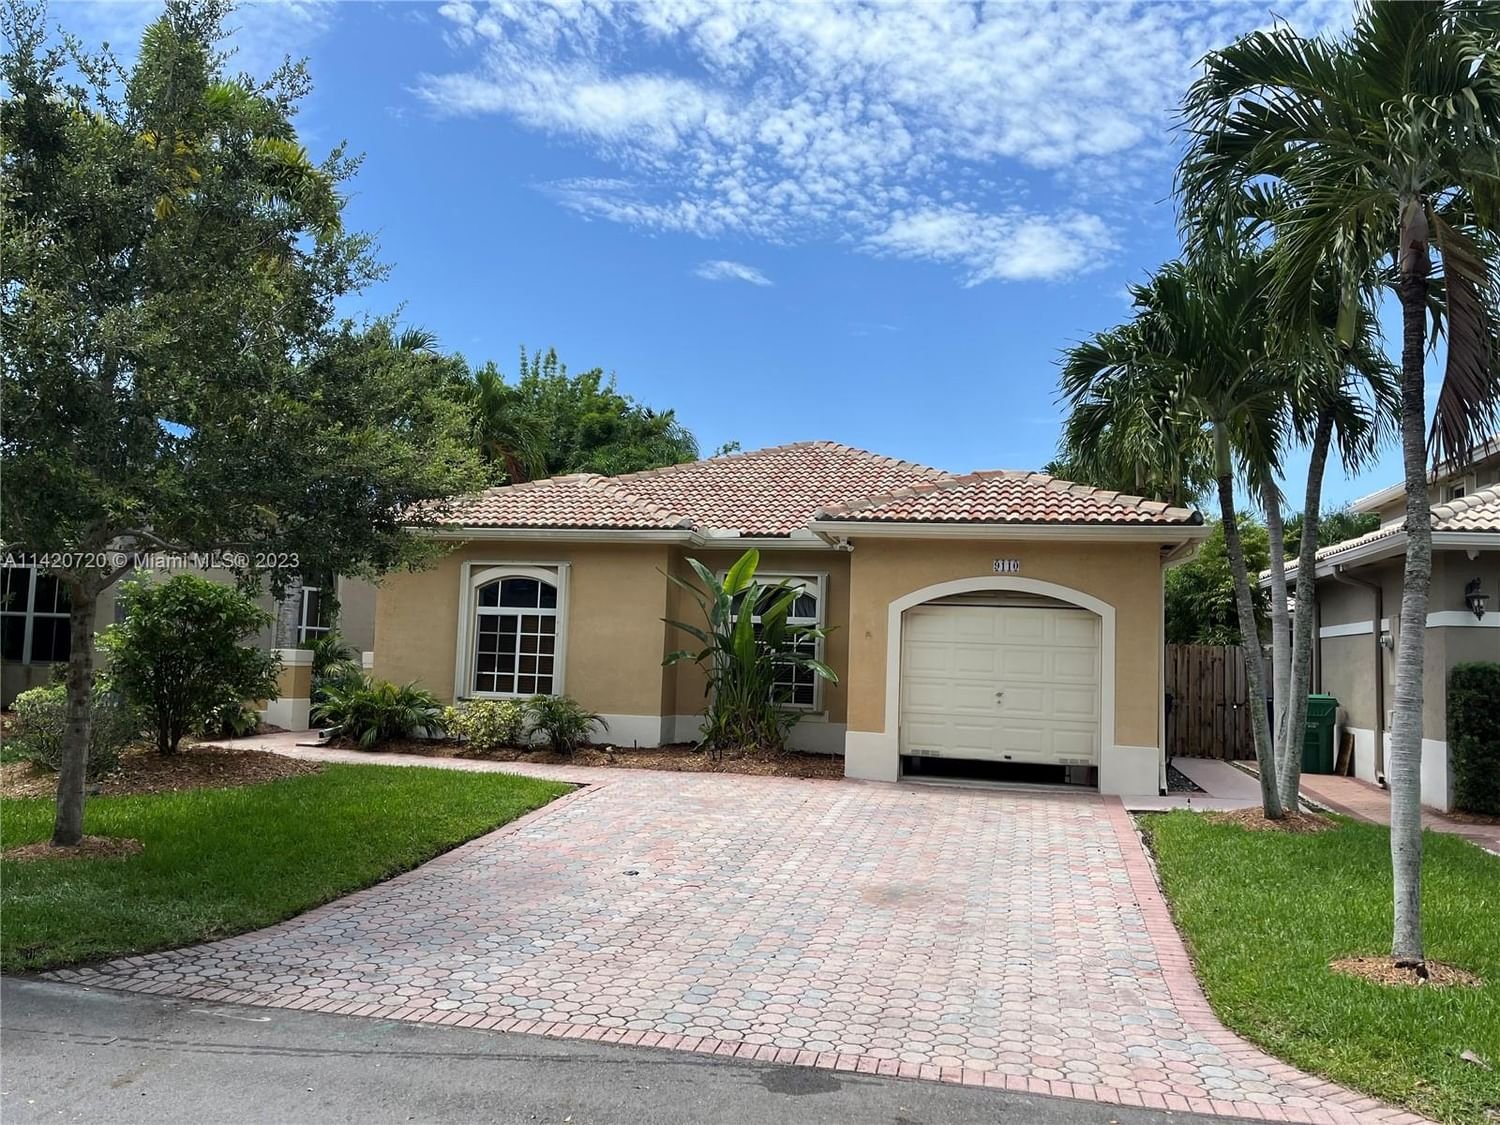 Real estate property located at 9110 162nd St, Miami-Dade County, KARENERO FALLS, Palmetto Bay, FL